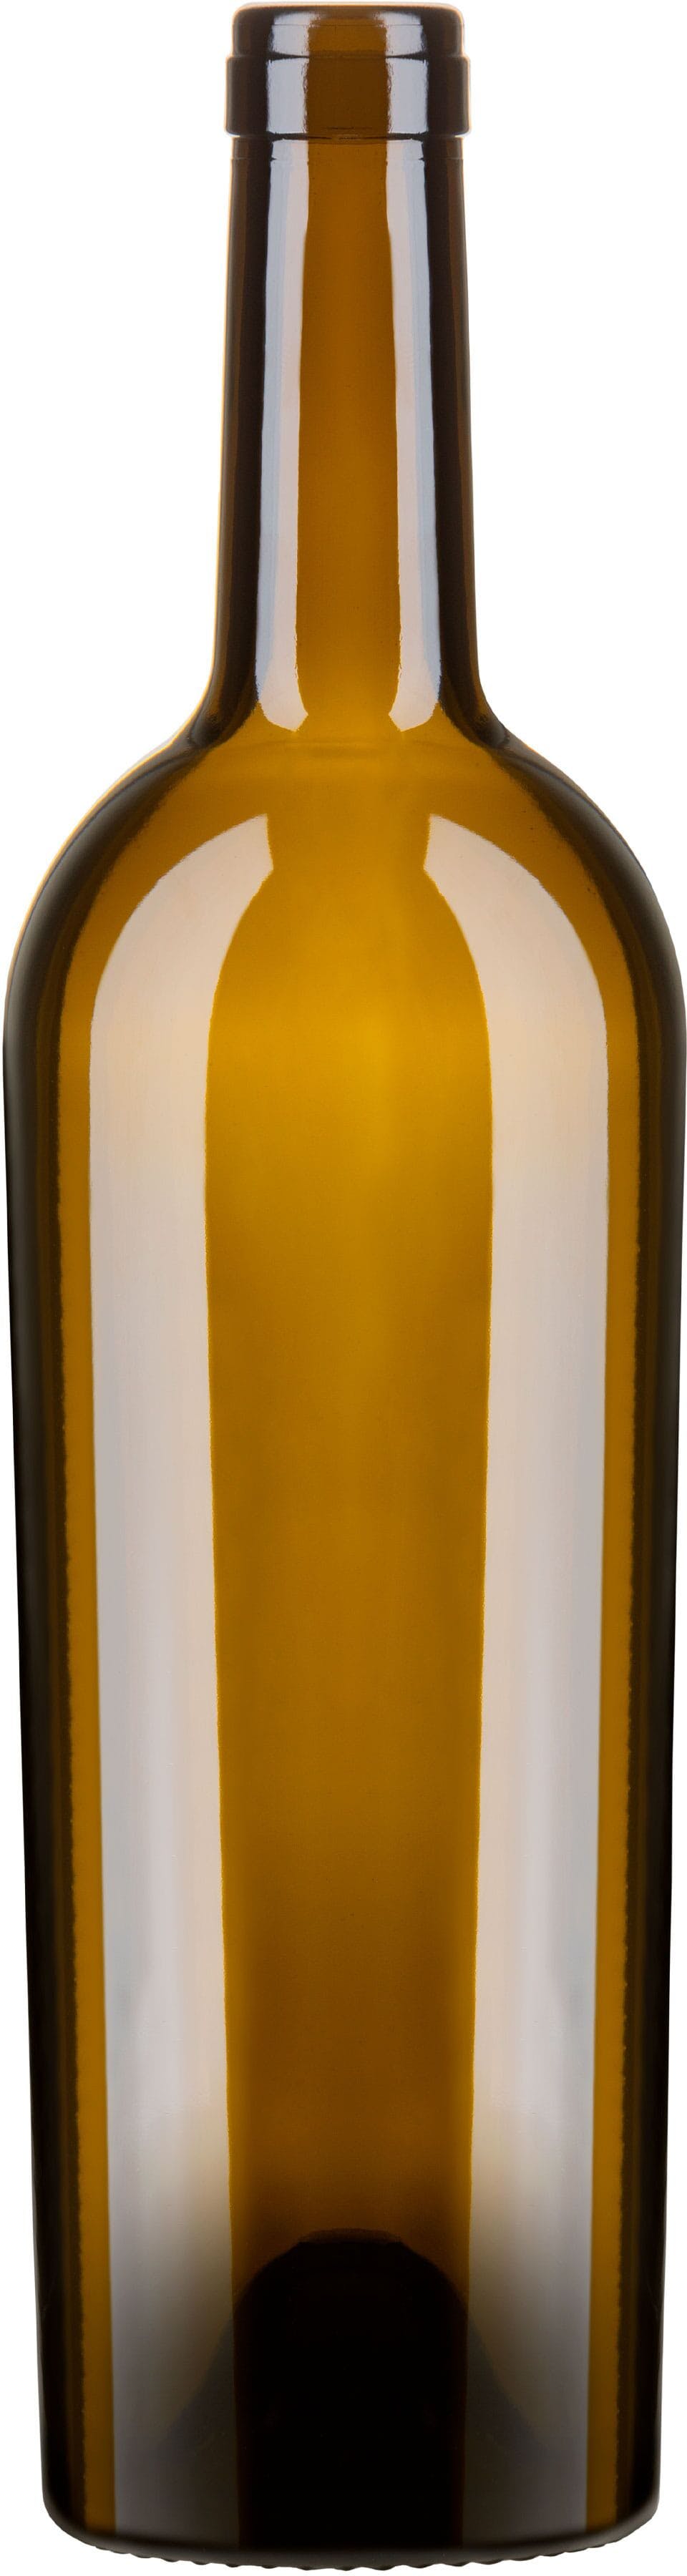 Flasche Bordeaux  ANCIENNE 750 ml BG-Korken